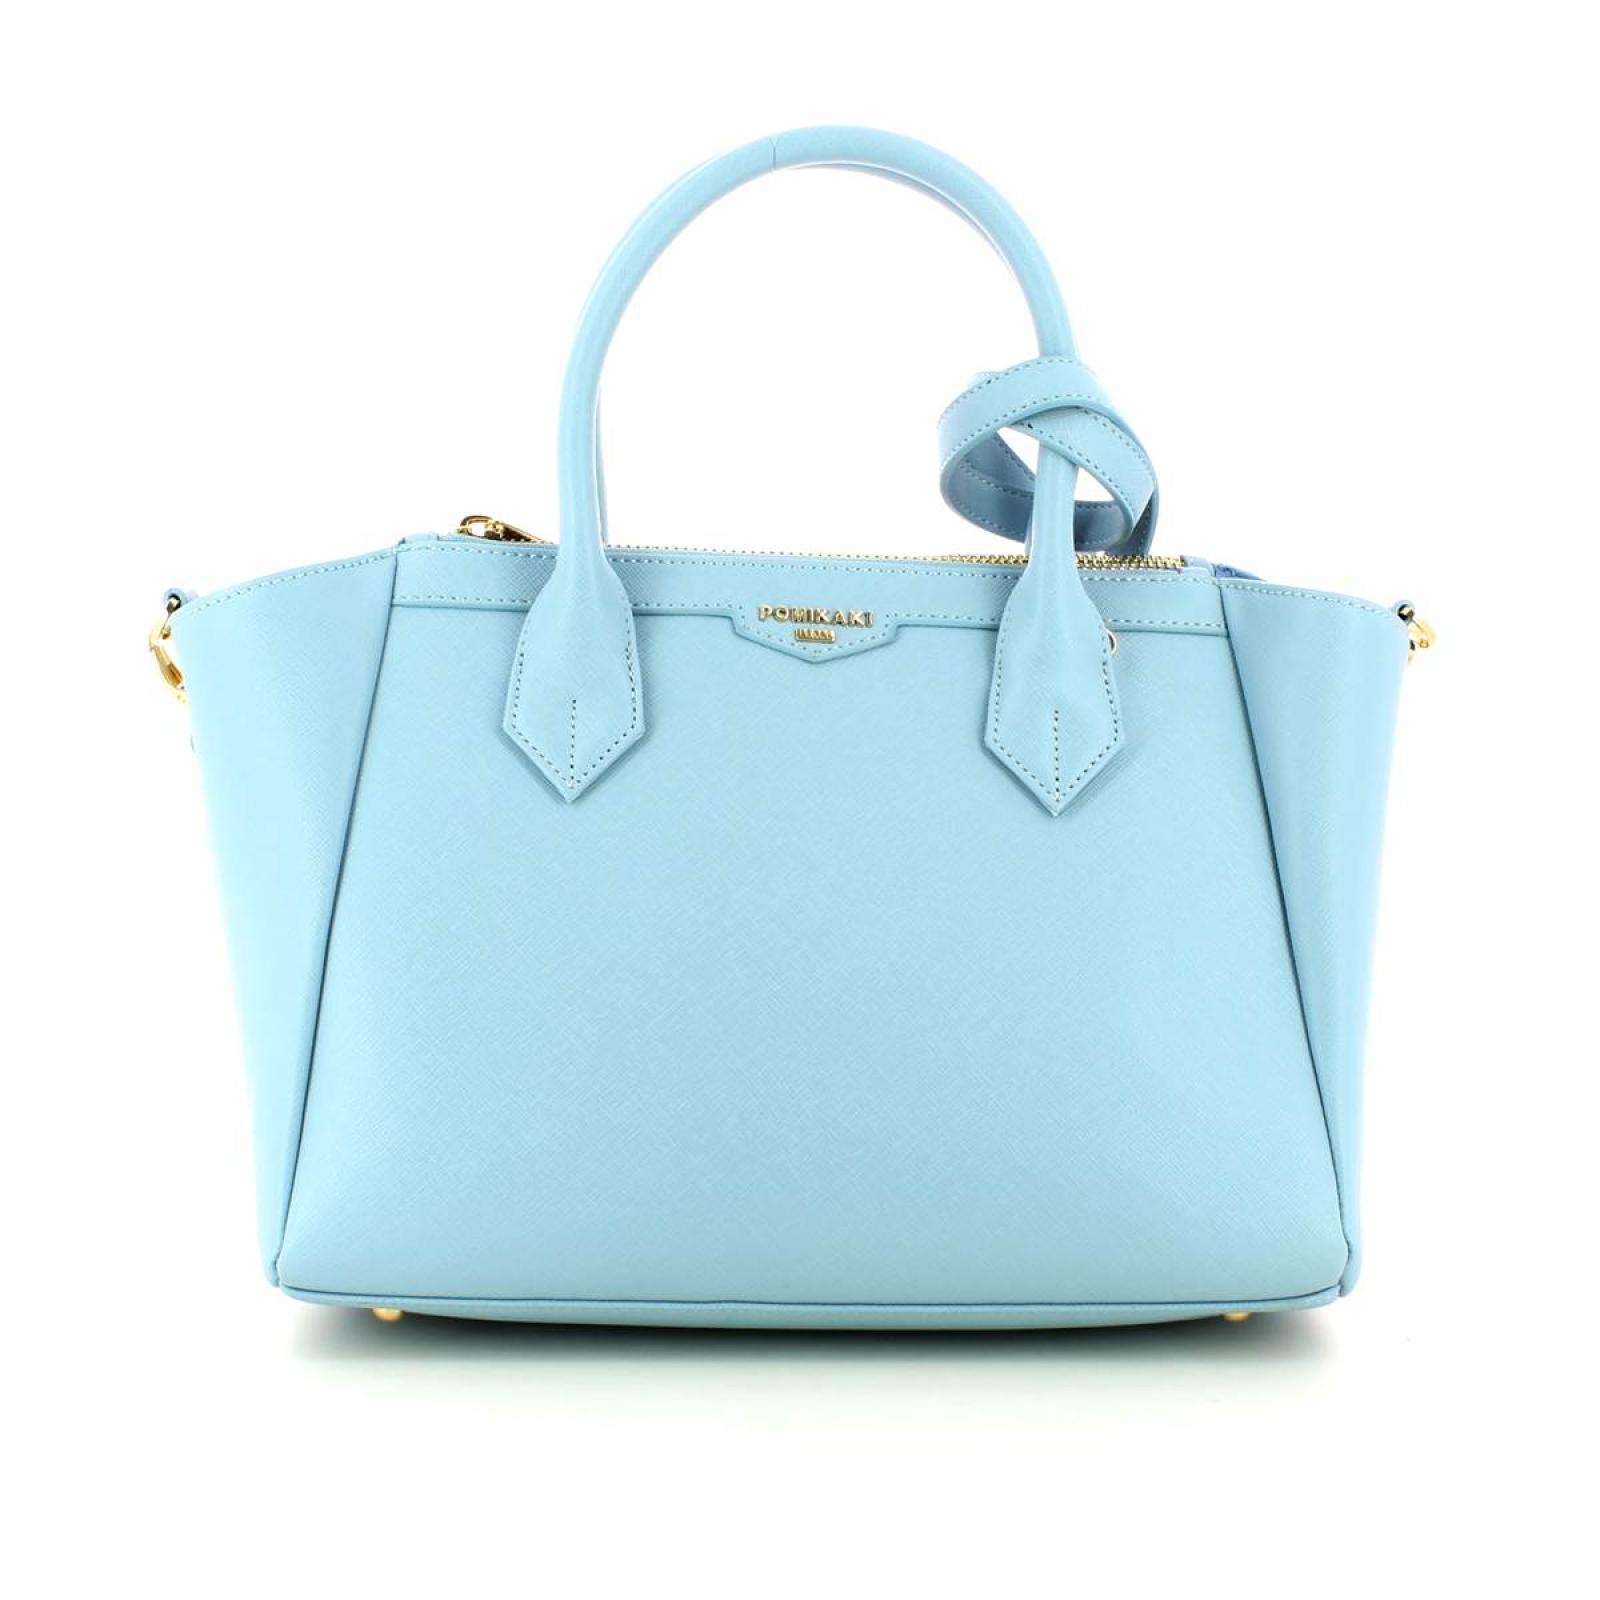 Christie Handbag